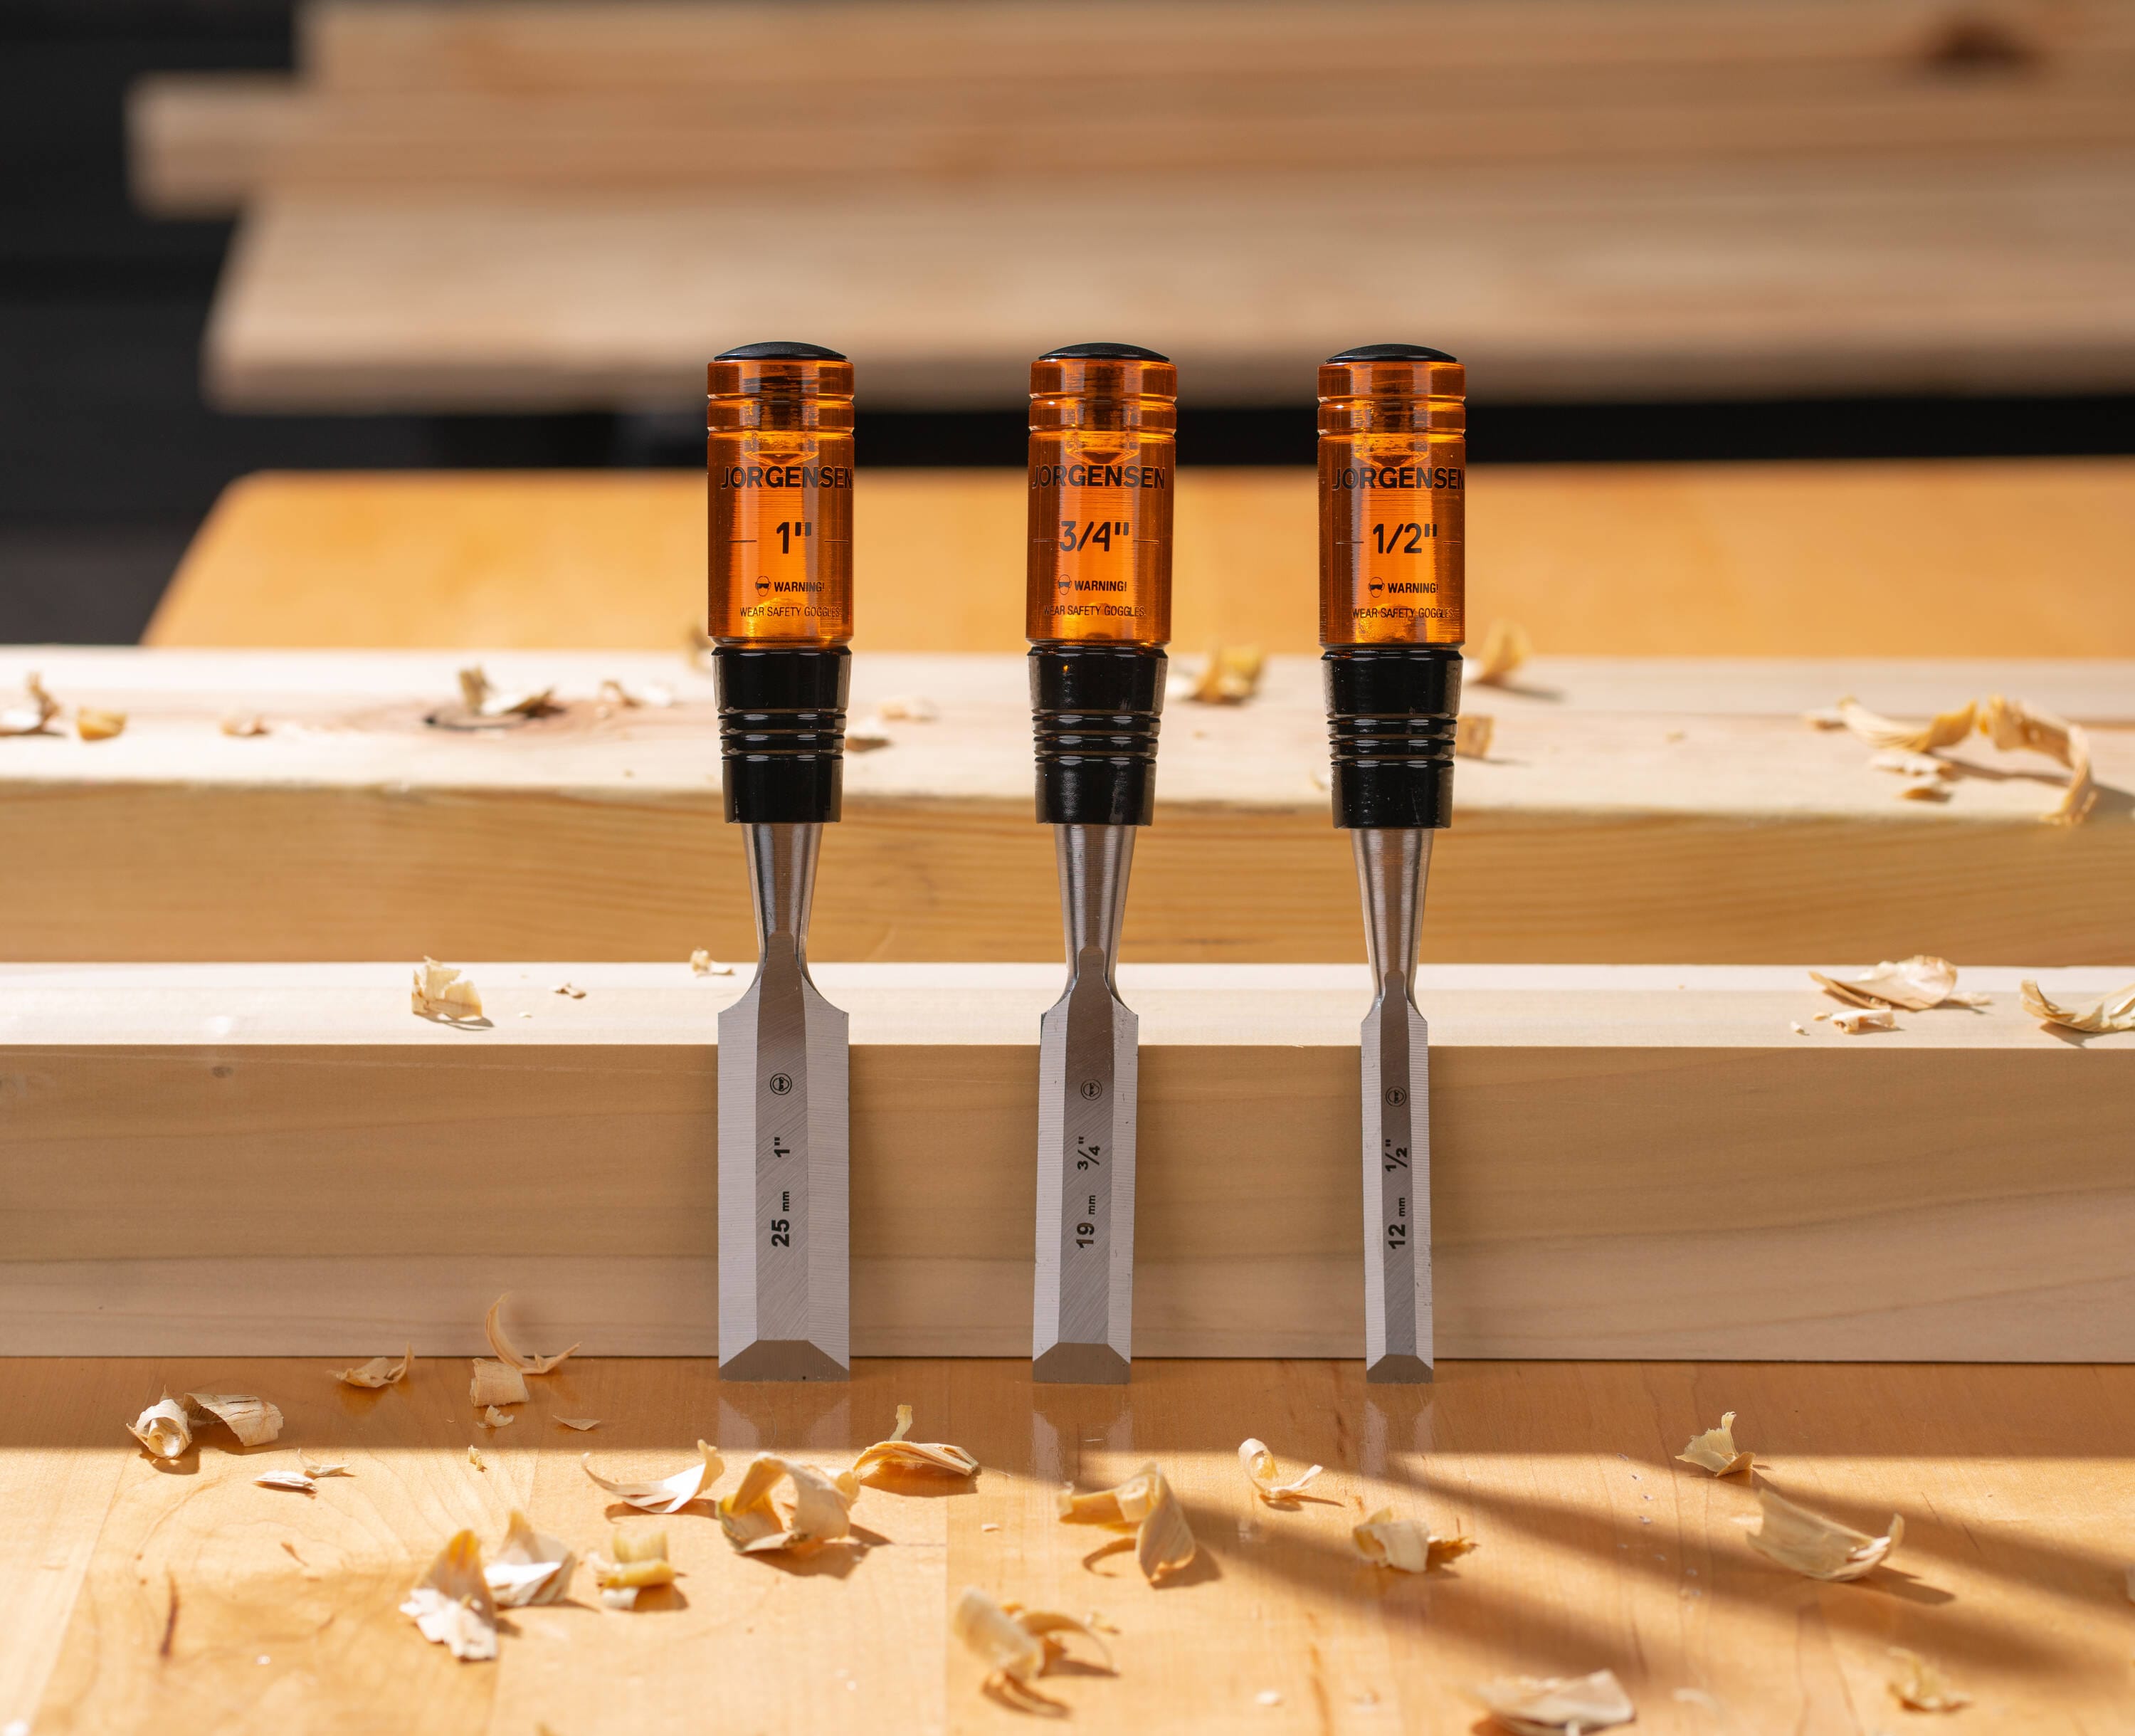 13pcs Wood Chisel Set, Premium Woodworking Chisel Sets W/ 8 CRV  Construction Wood Chisels, 1 Sharpening Stone, 